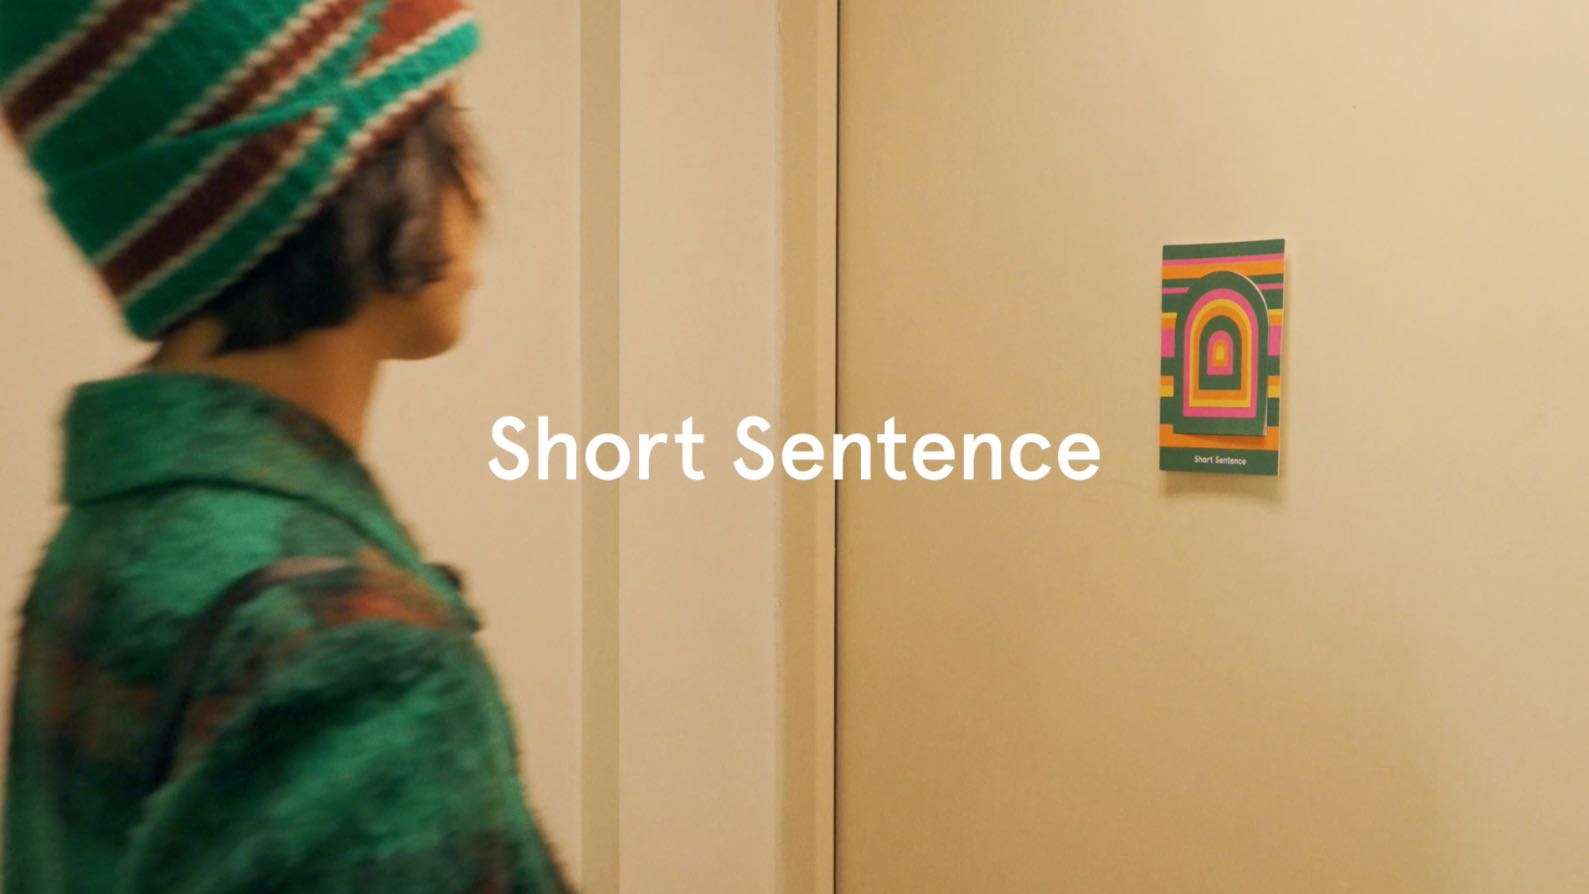 Short Sentence - Holiday Gift Shop